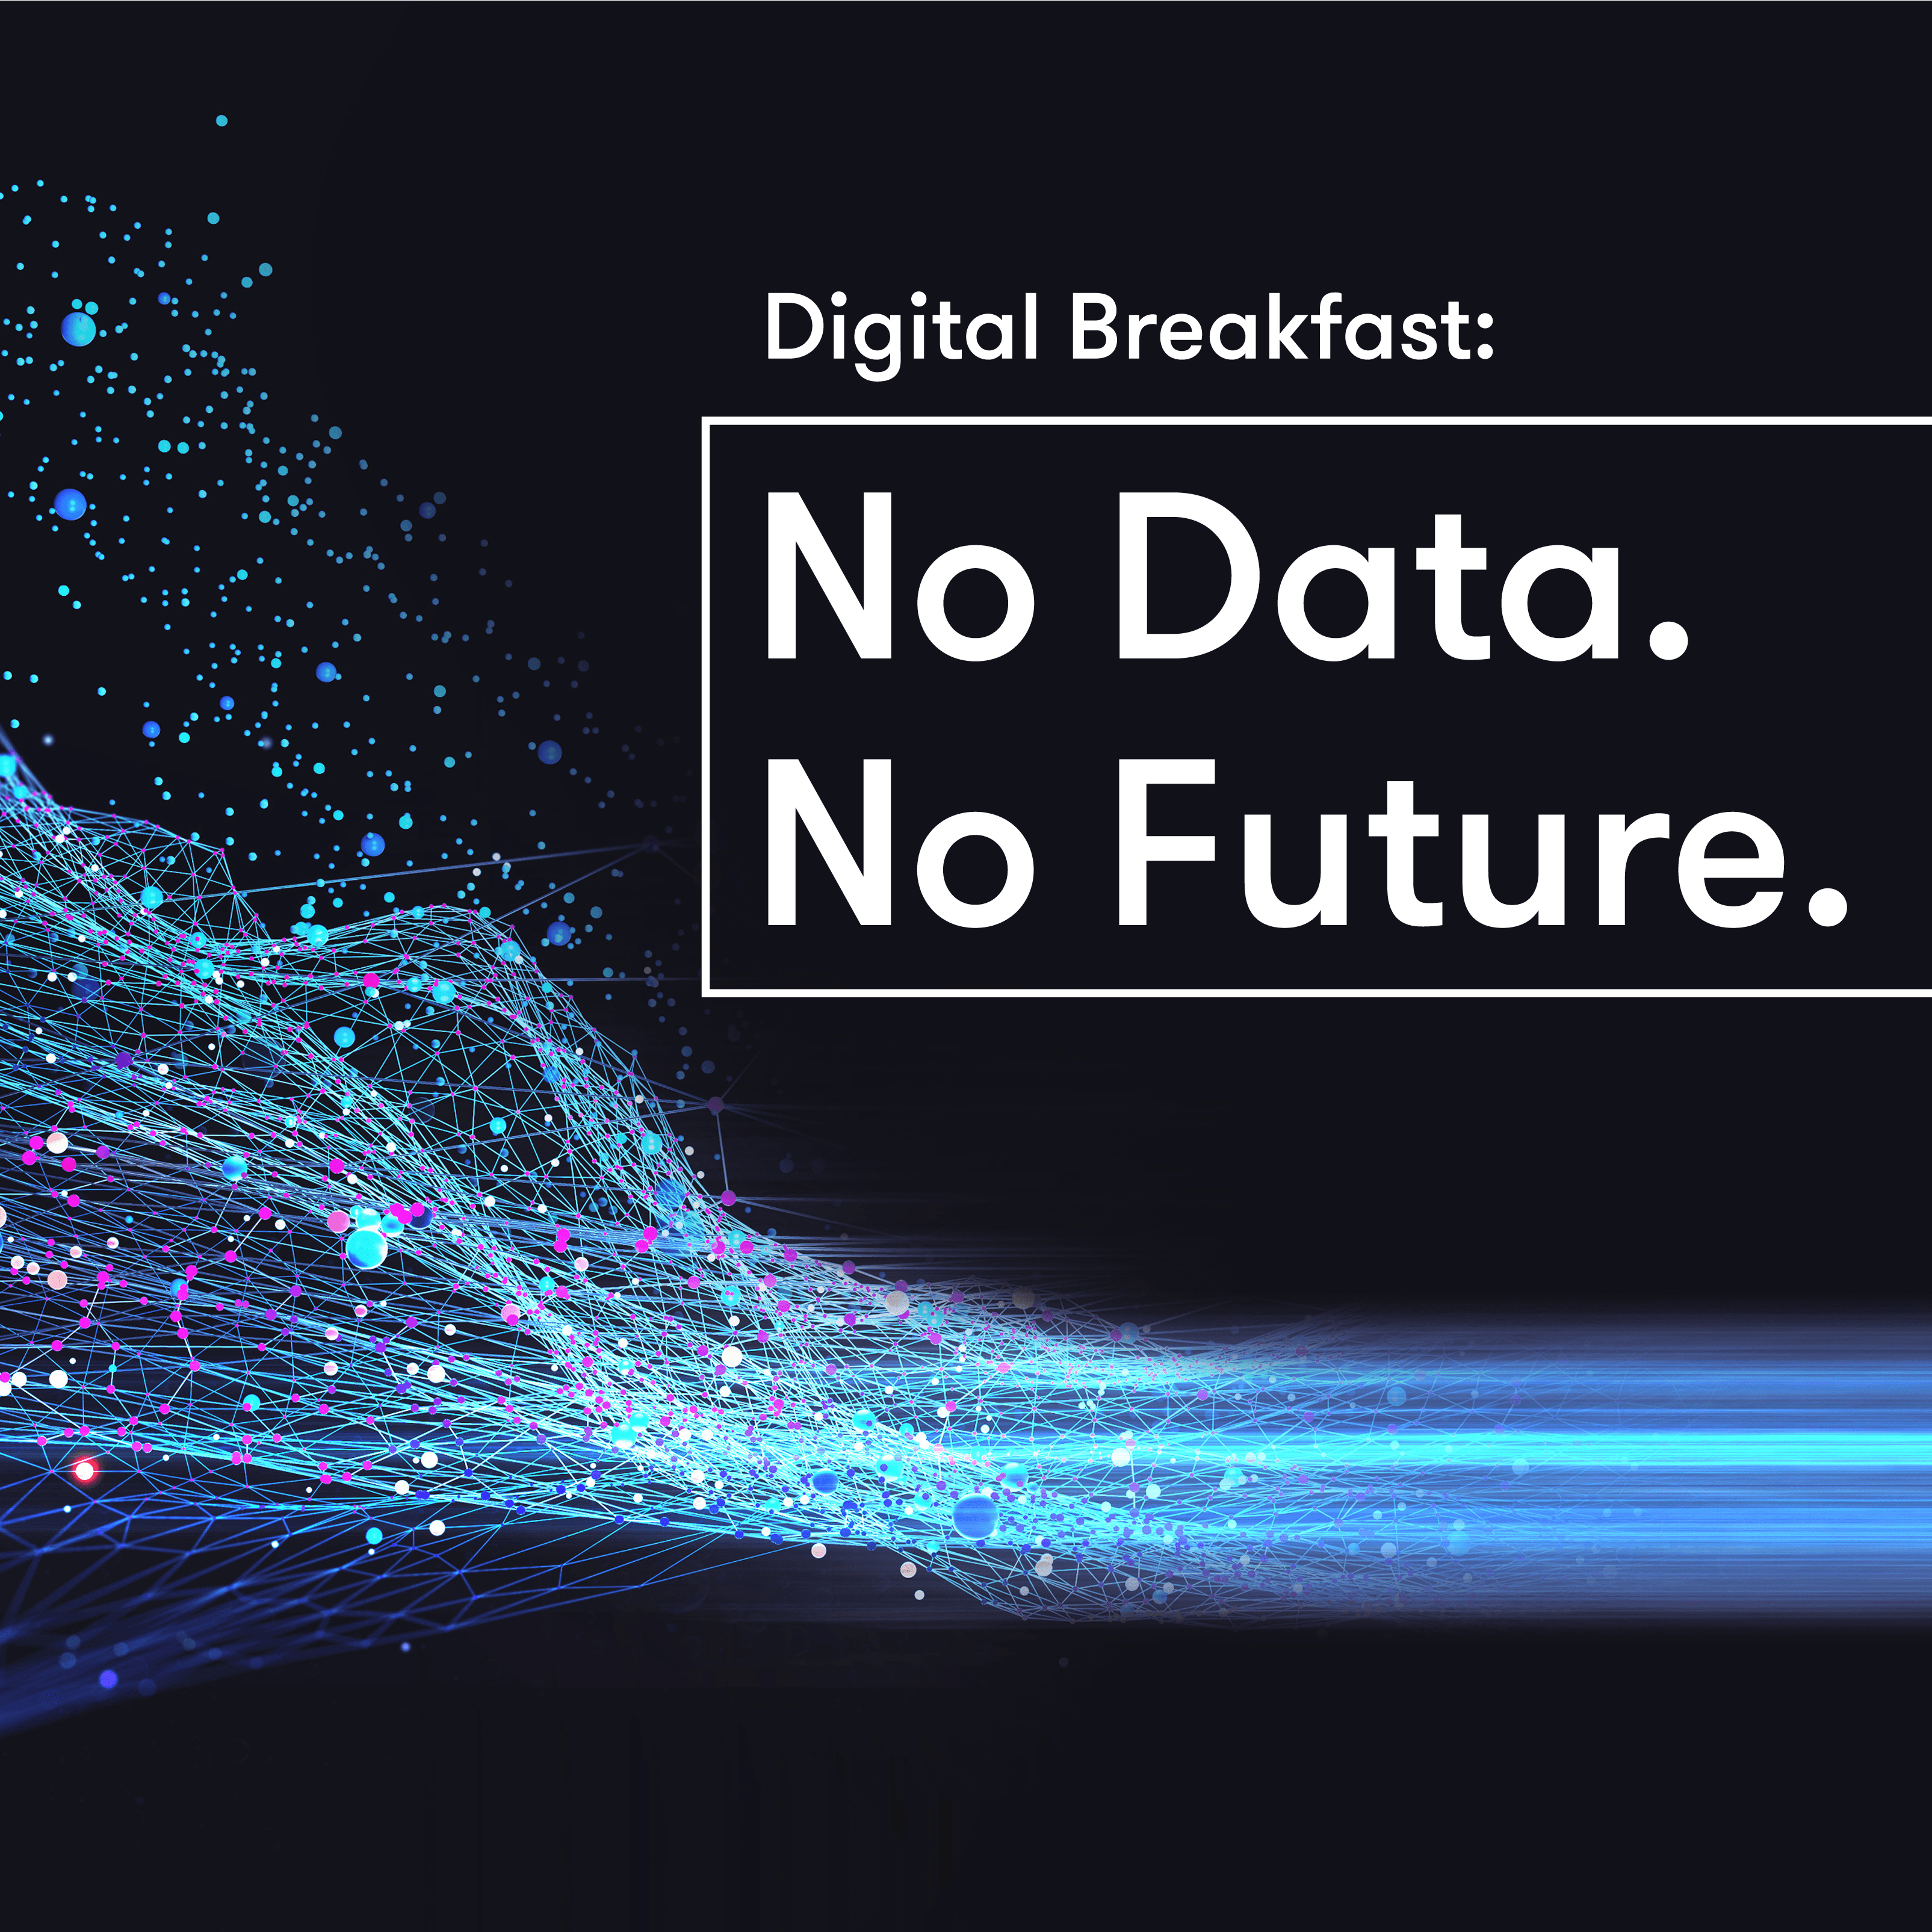 Digital Breakfast: No Data, No Future